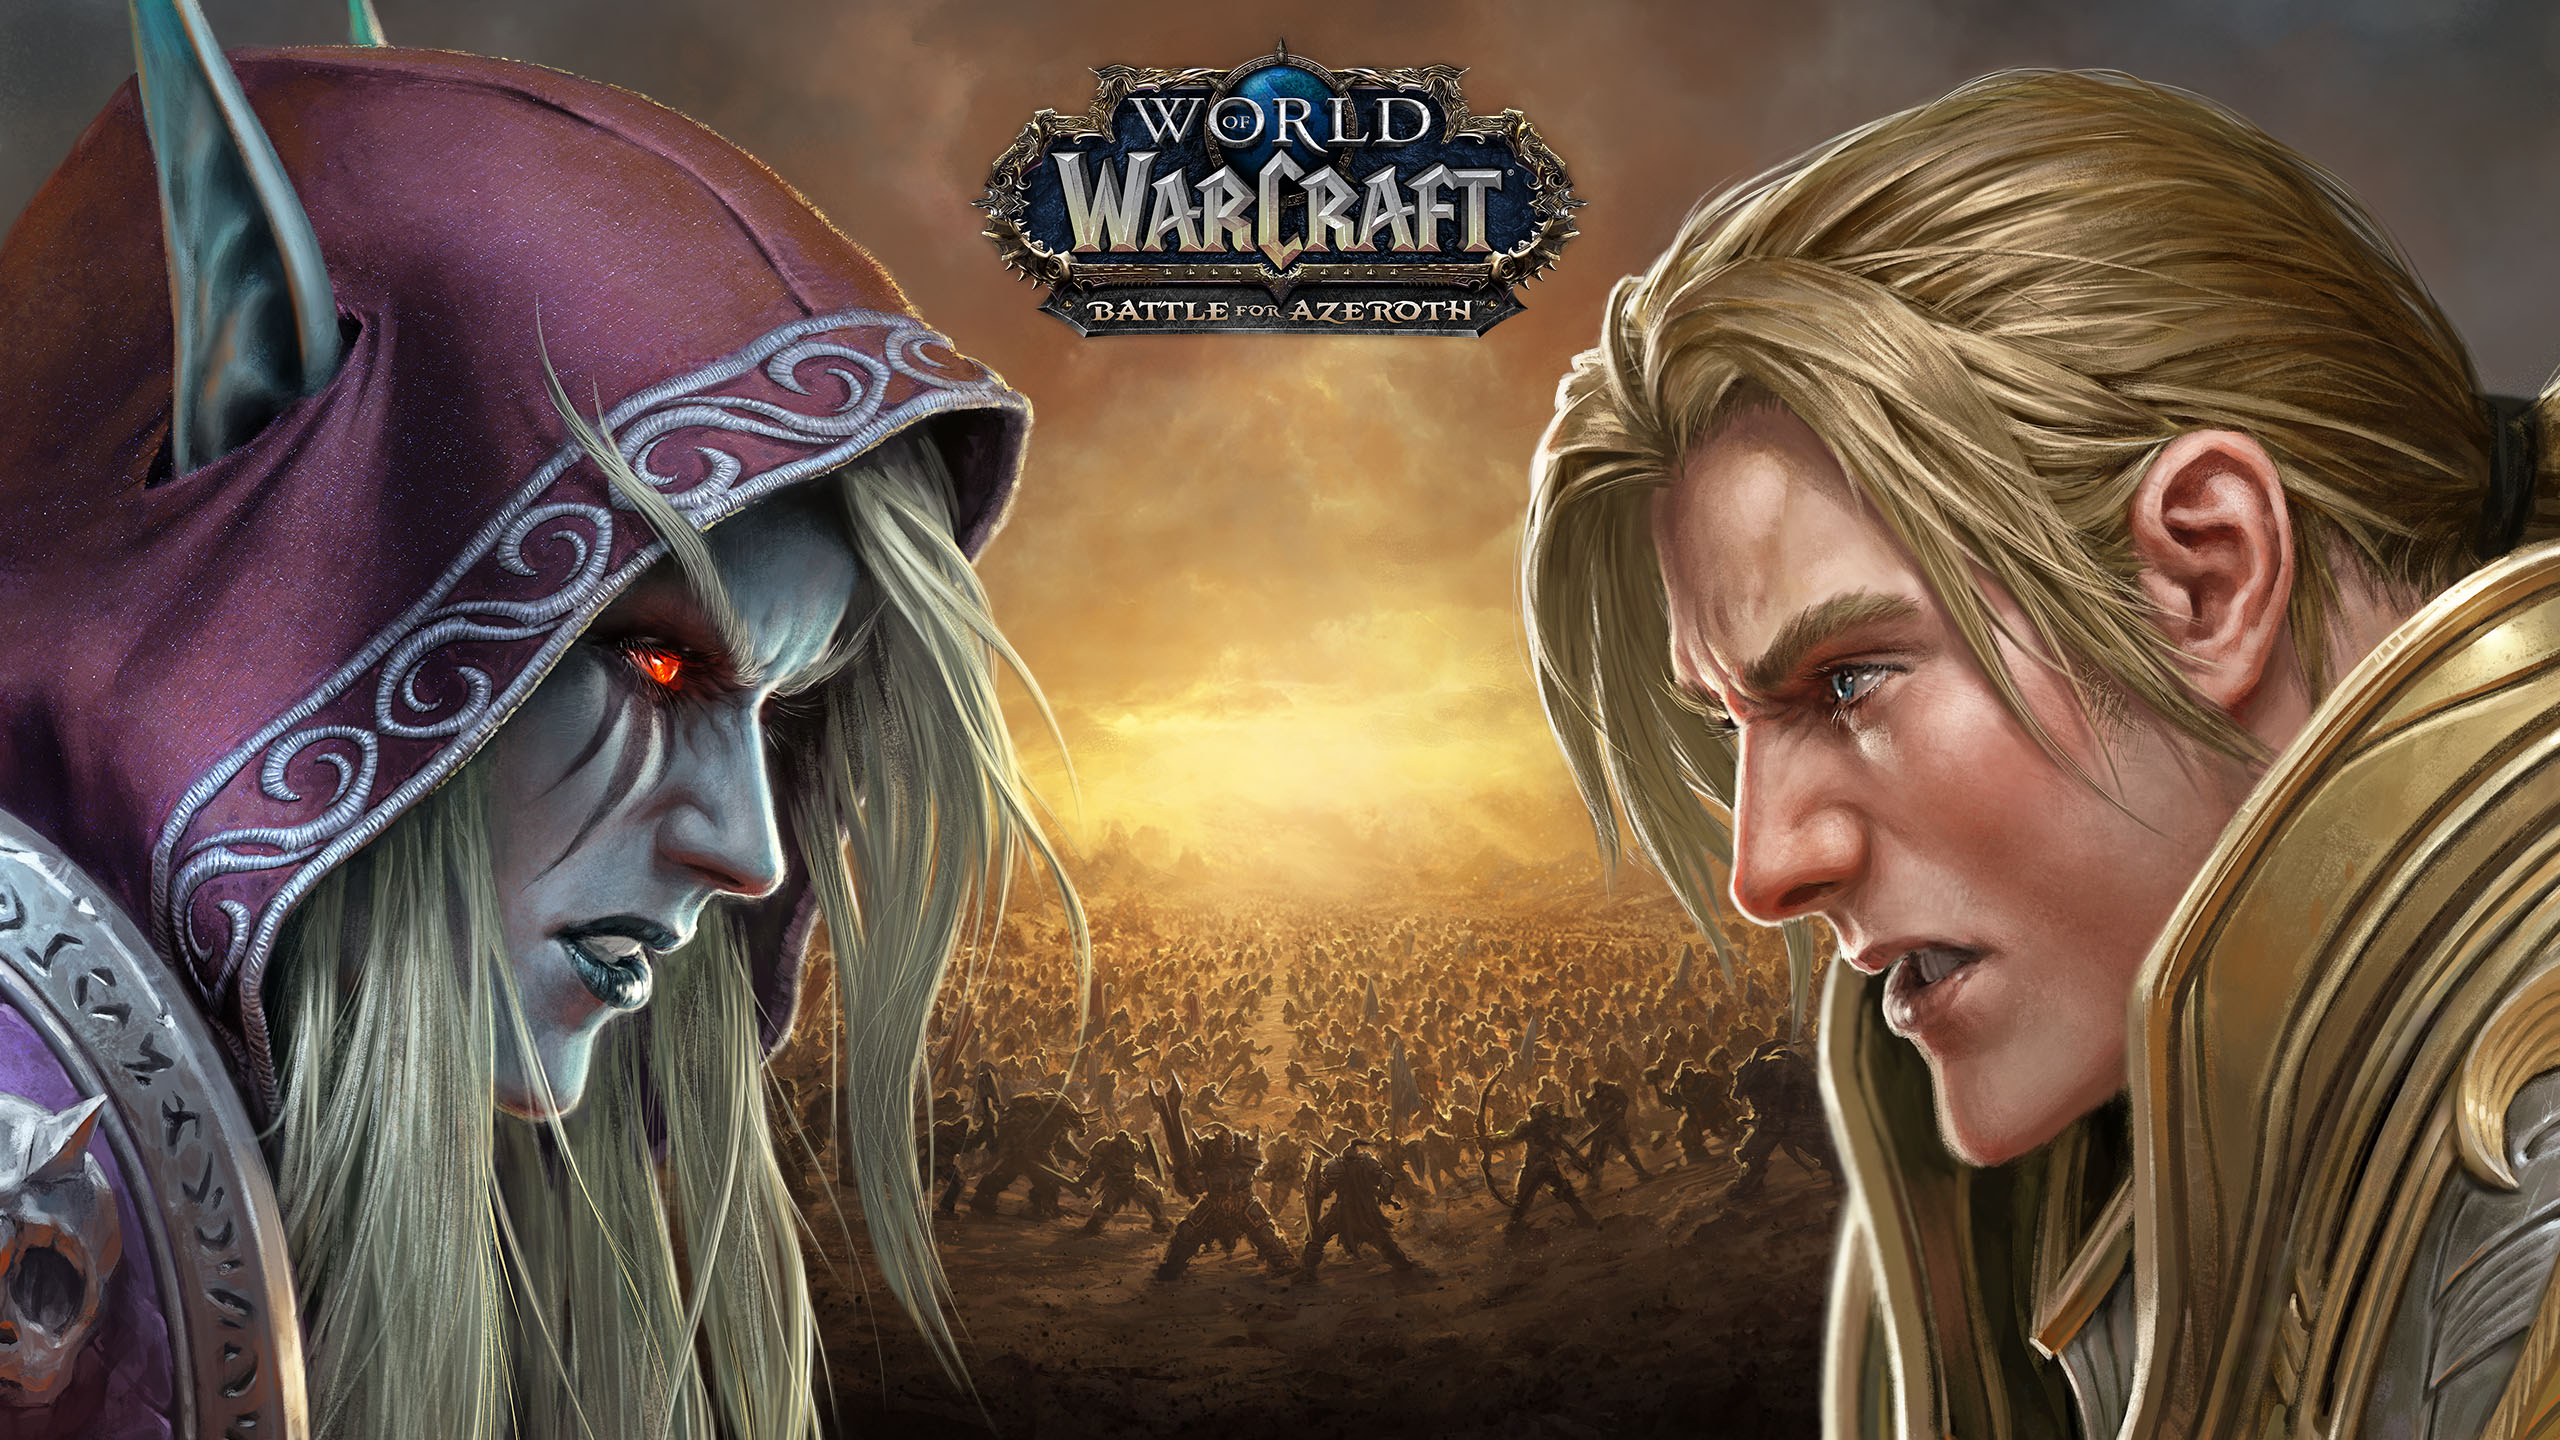 General 2560x1440 World of Warcraft World of Warcraft: Battle for Azeroth horde Alliance Sylvanas Windrunner Anduin Wrynn video games video game art logo